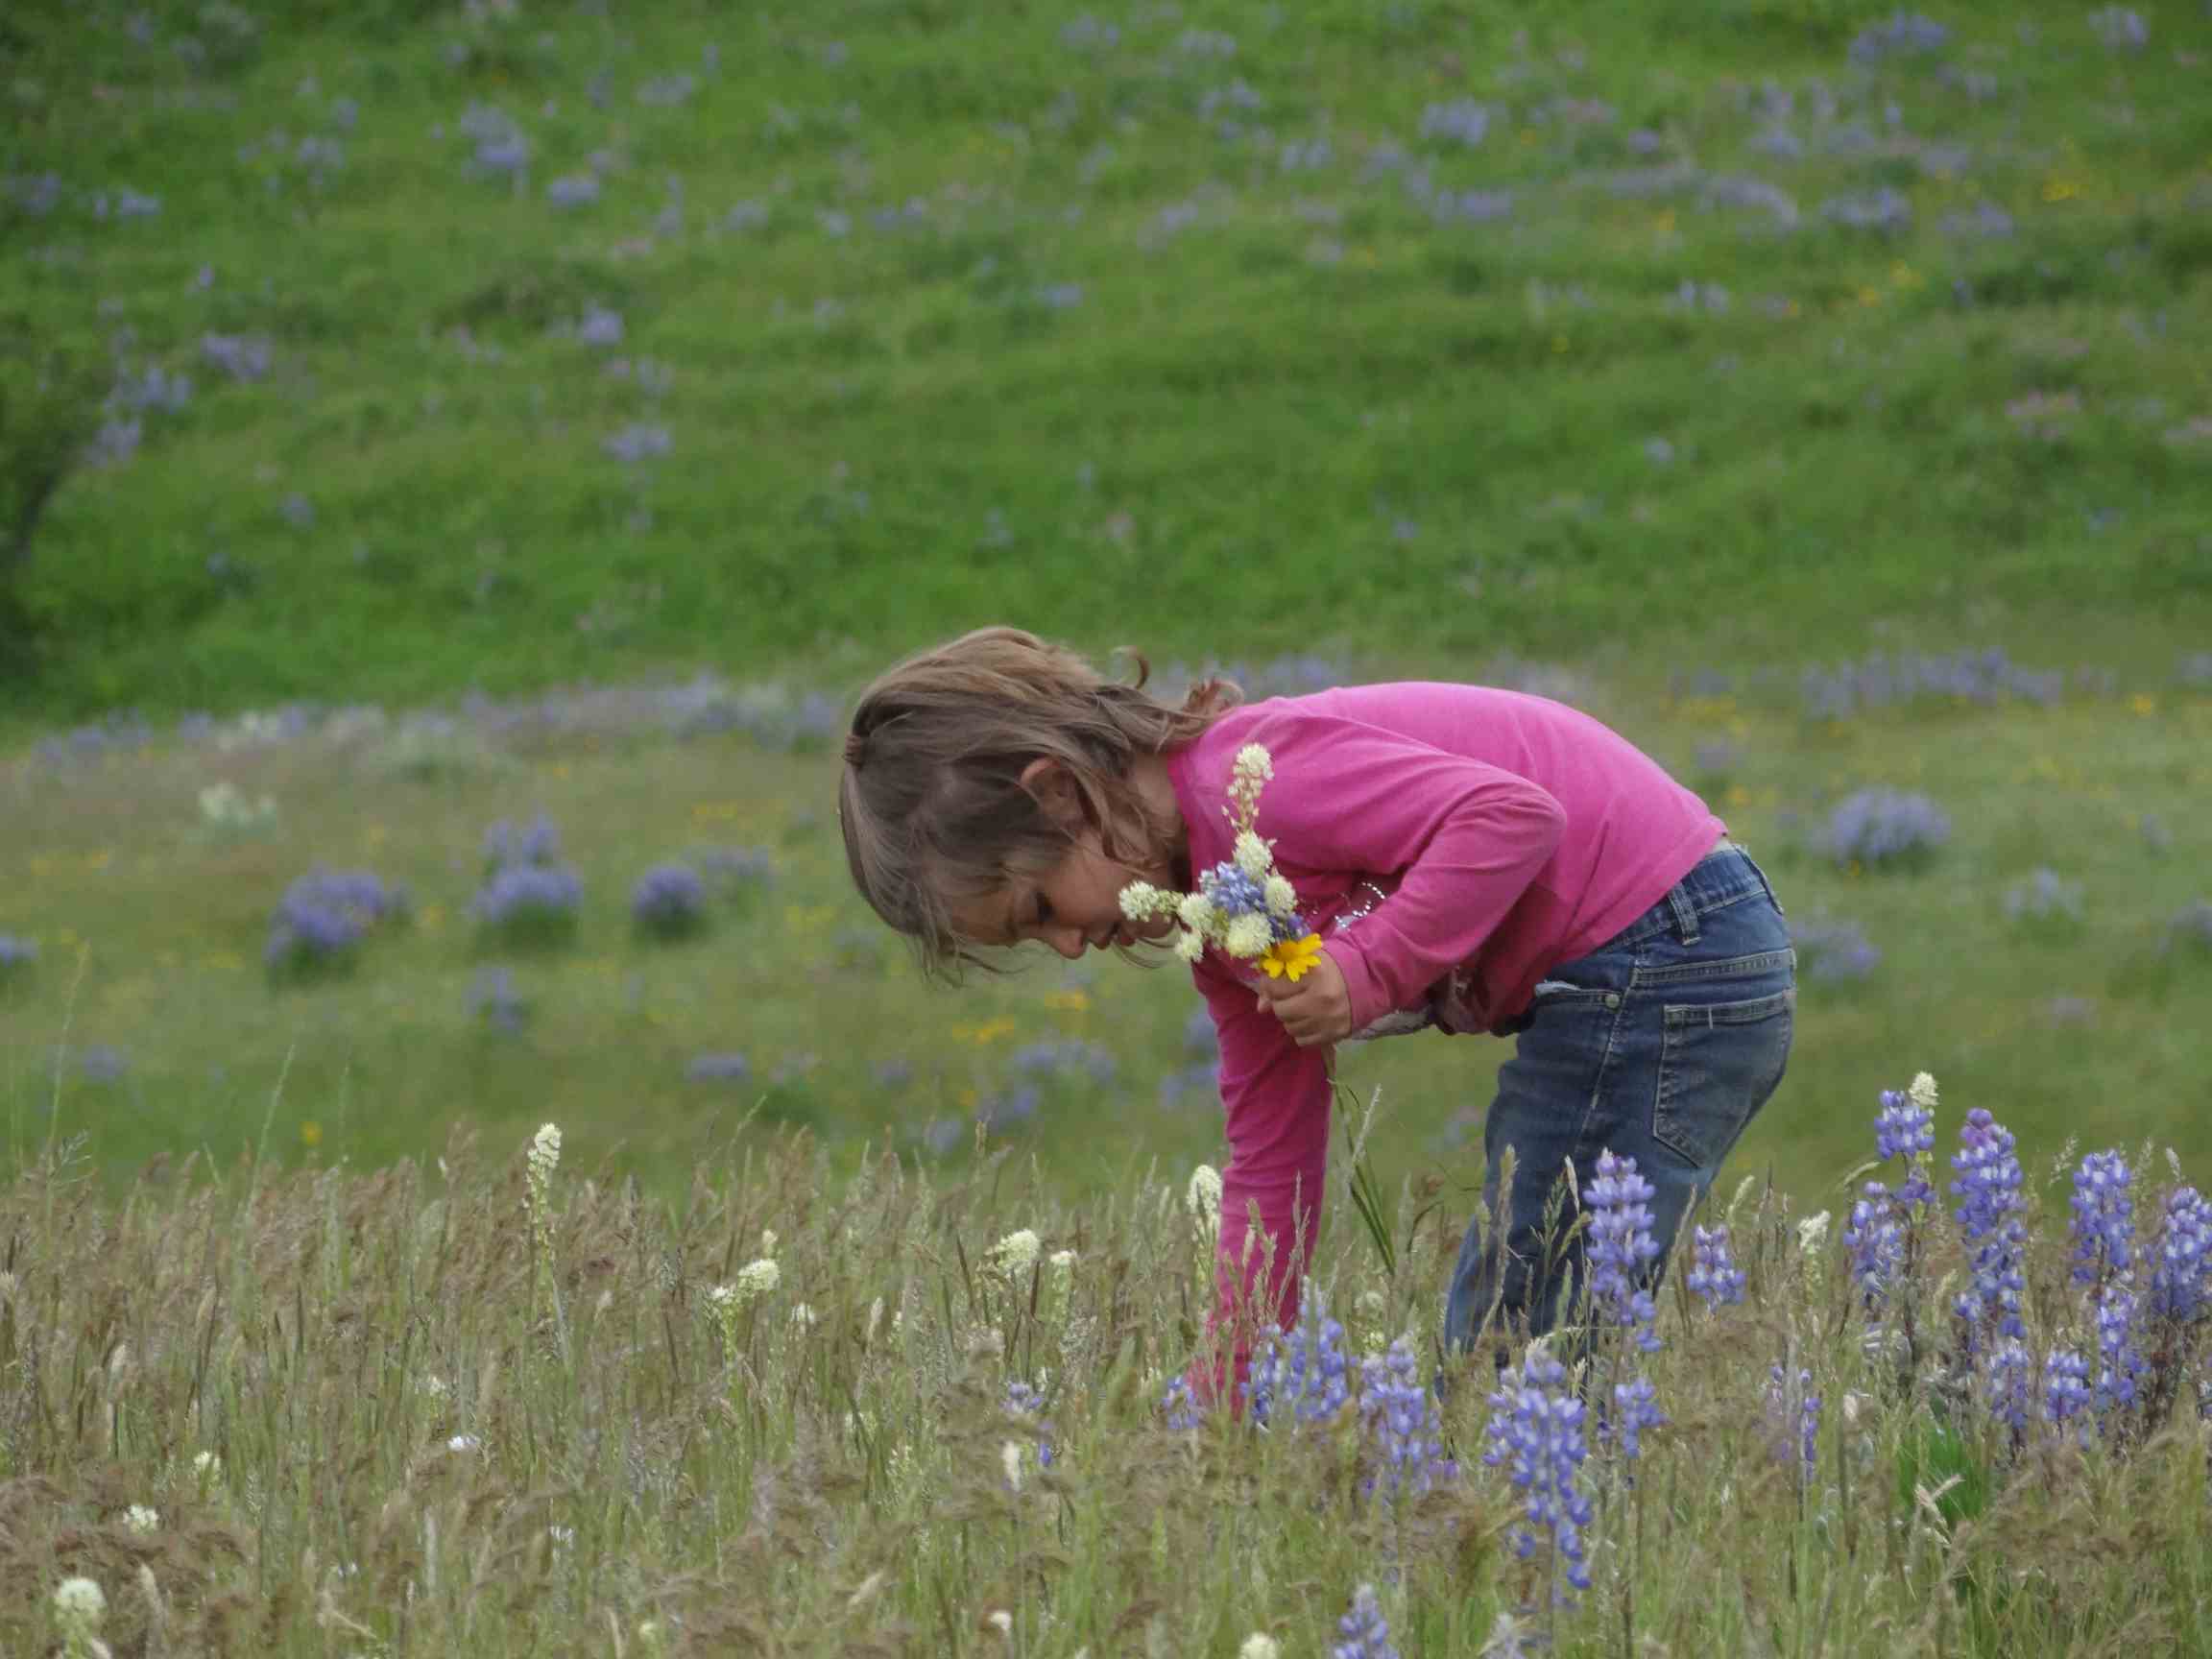 Spring brings fields of breathtaking wildflowers to Montana's landscape.